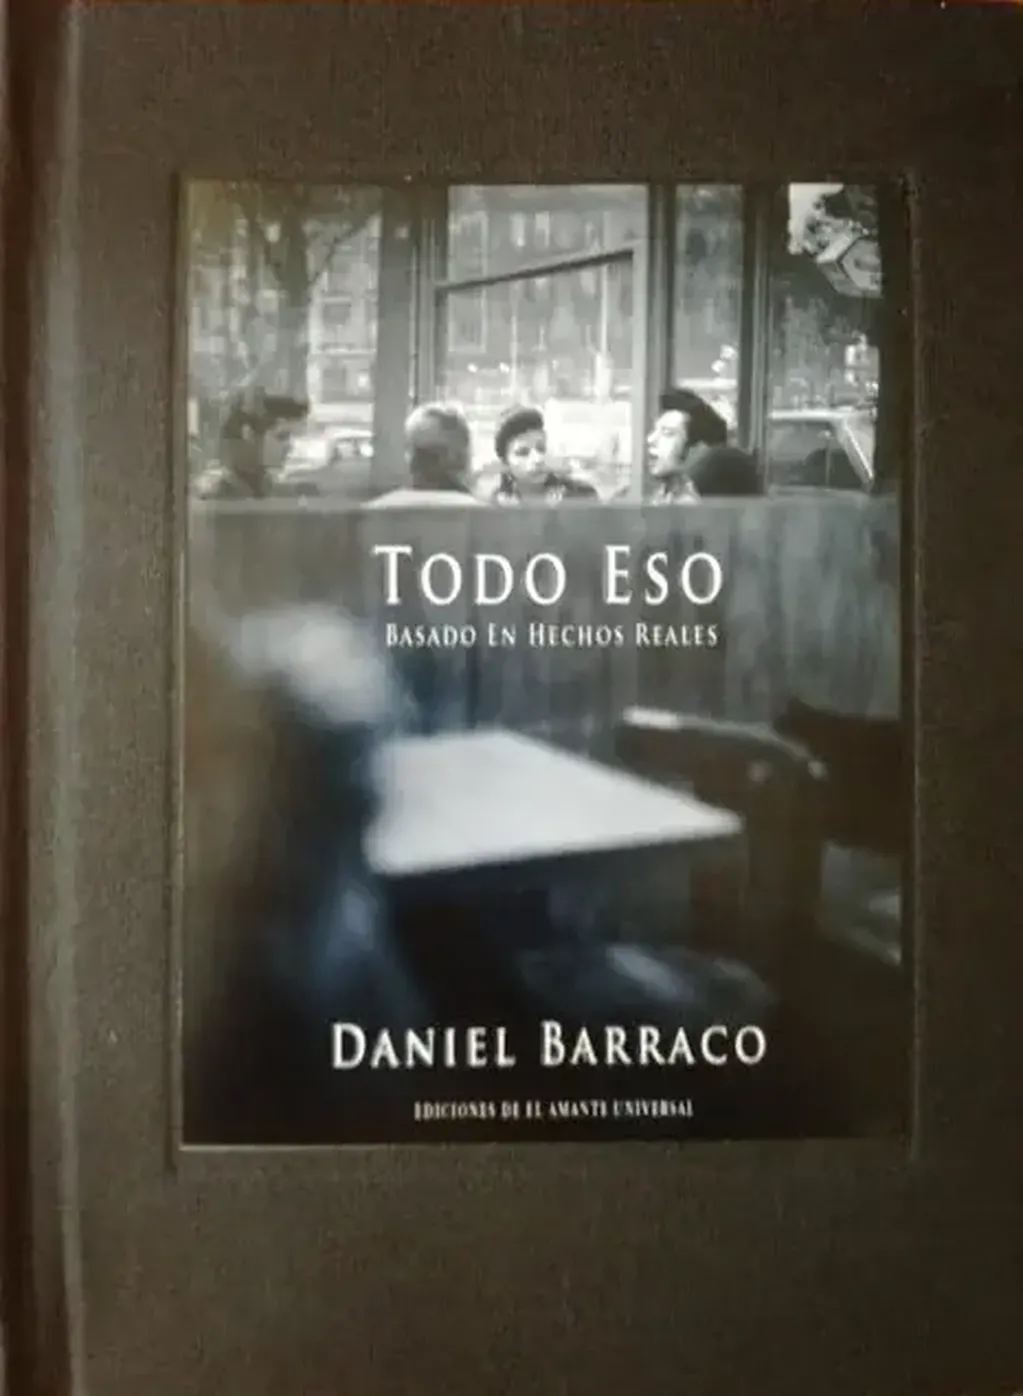 Daniel Barraco